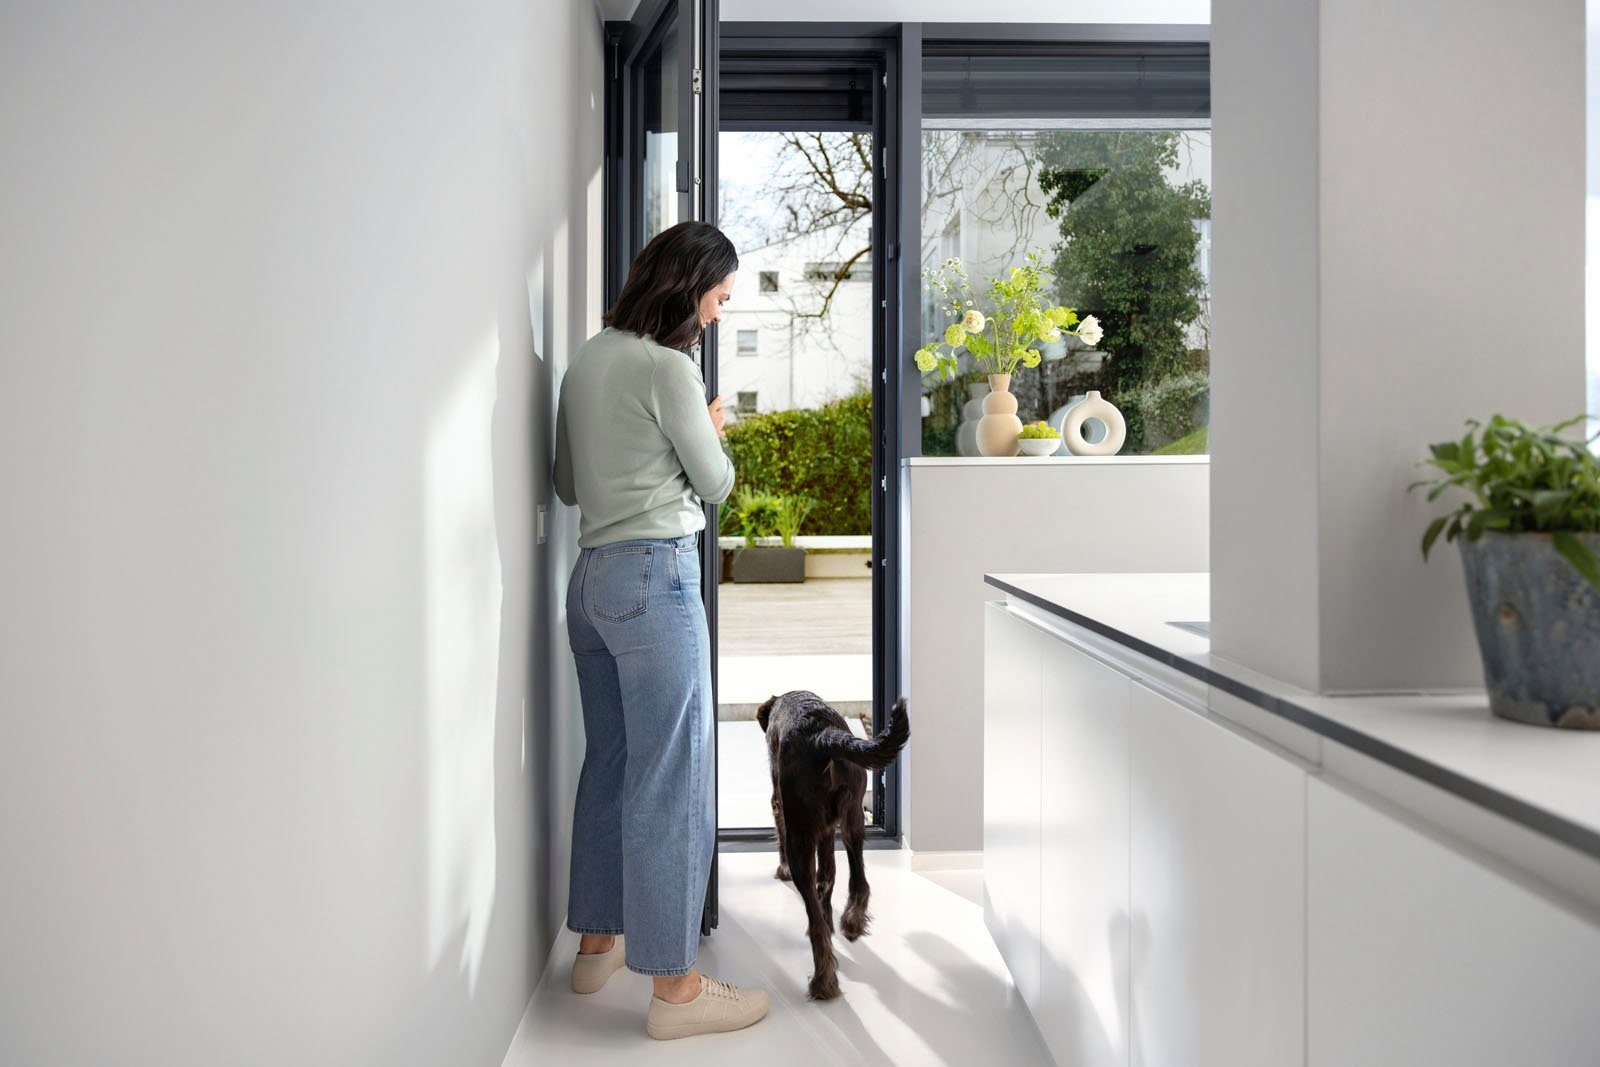 Tür-/ BOSCH Fensterkontakt II Plus weiß Sensor Home Smart